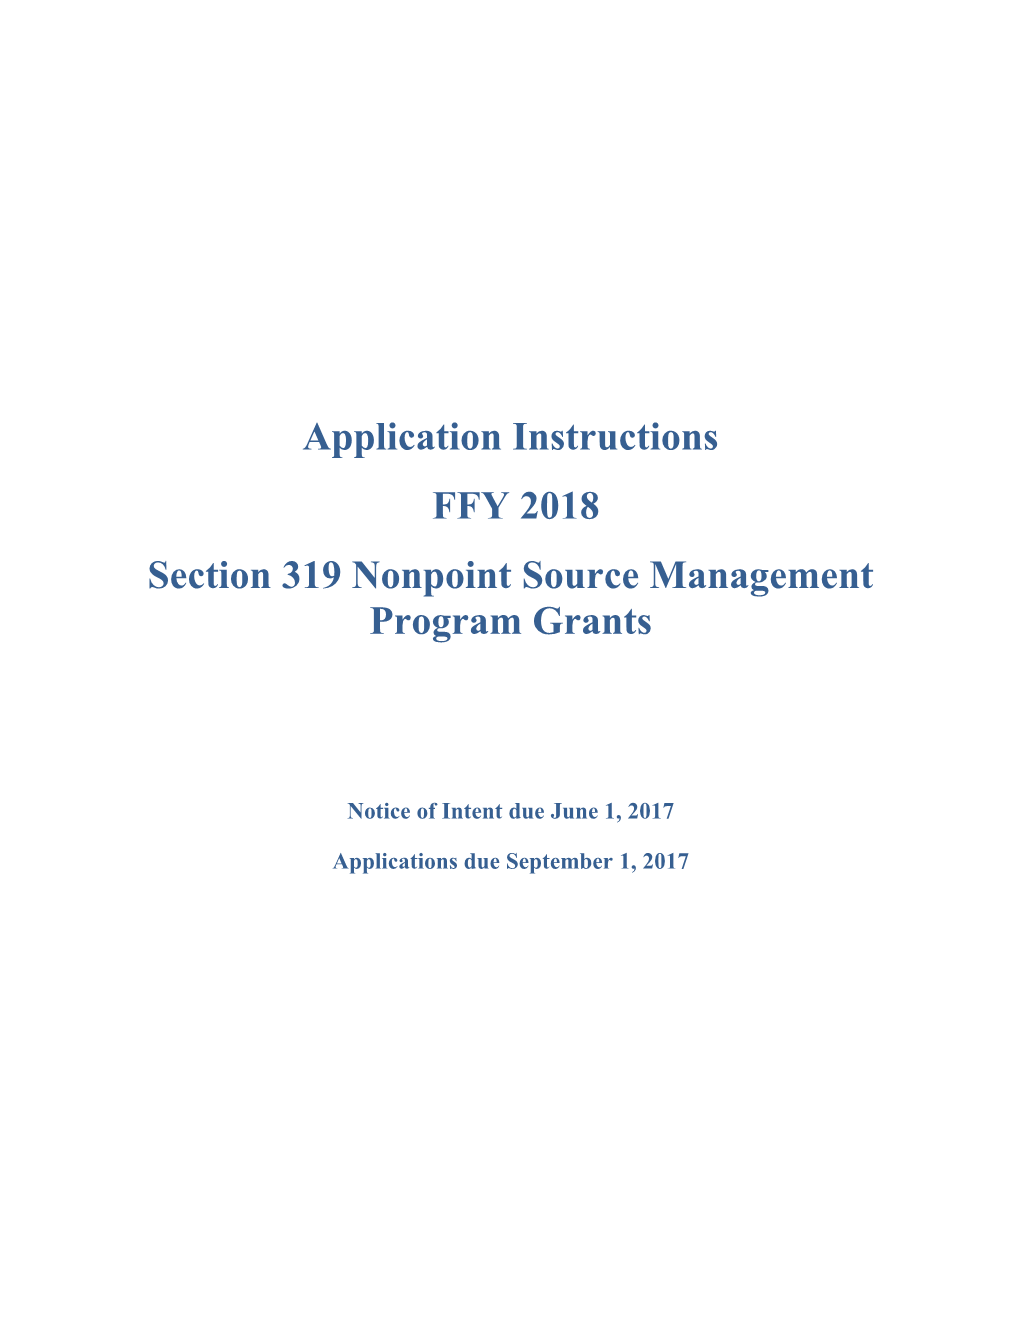 Section 319 Nonpoint Source Management Program Grants